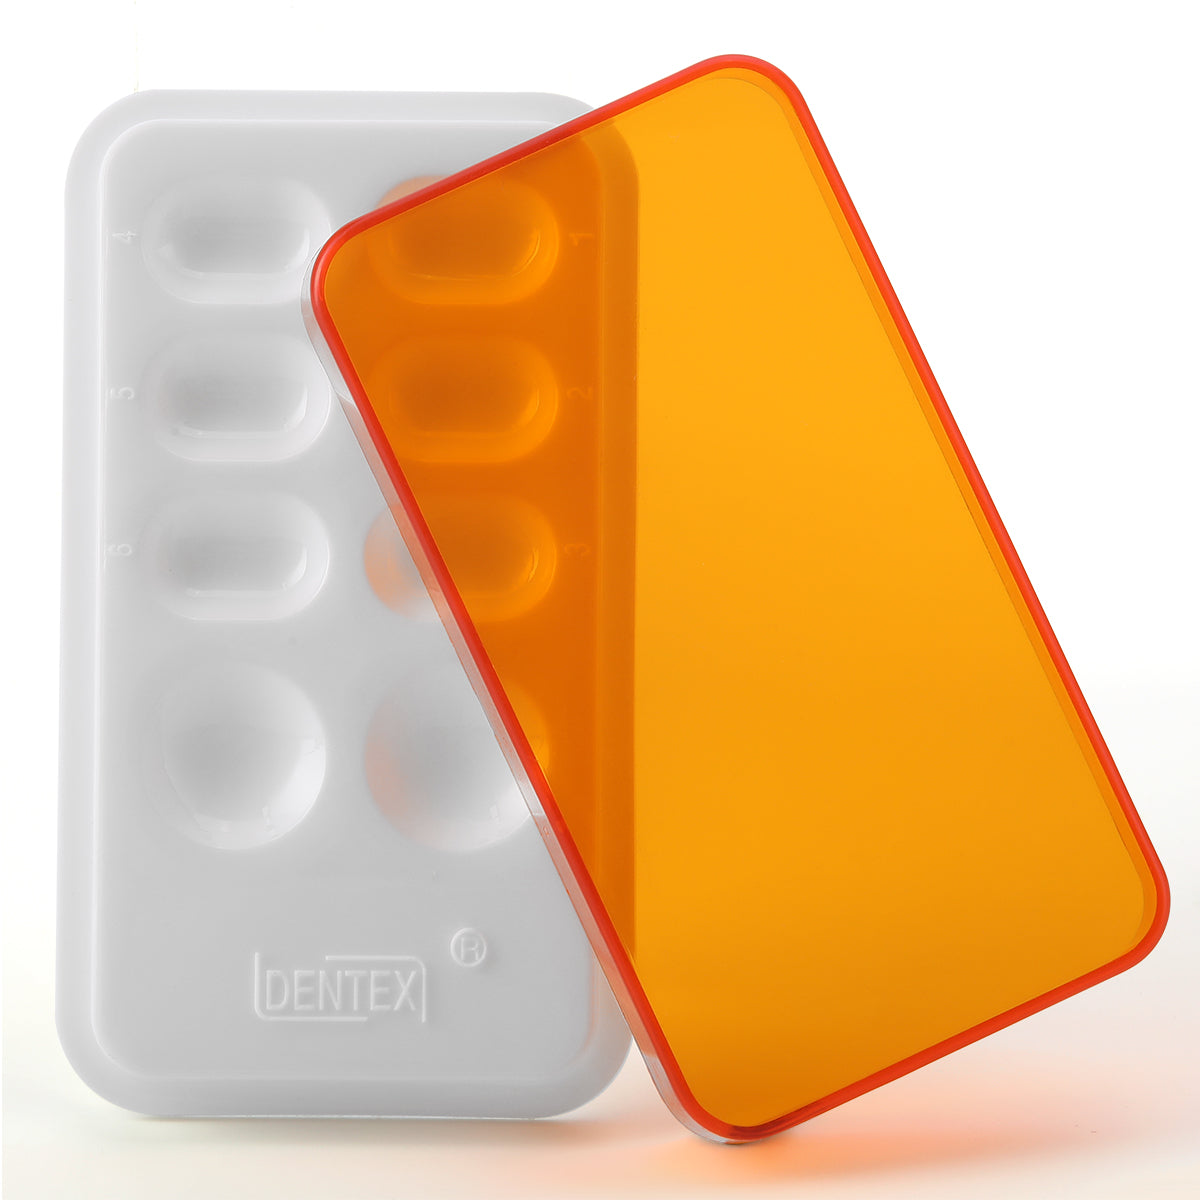 8 Holes Dental Veneer Storage Box Shading Light Storage Case - pairaydental.com